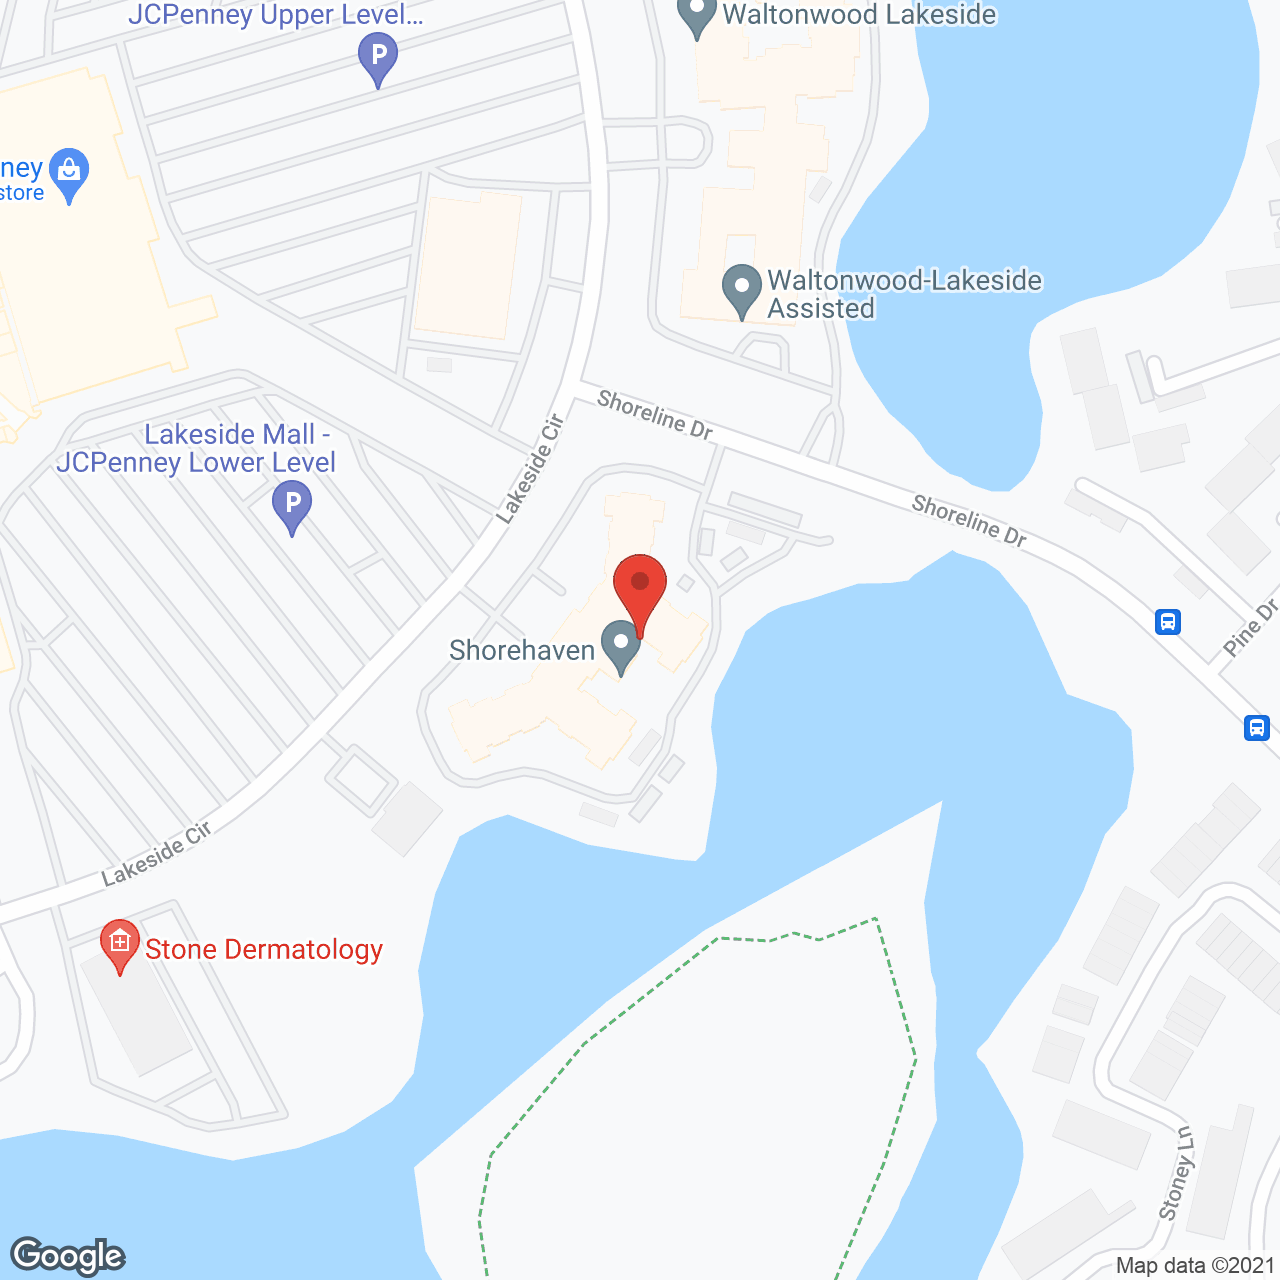 Shorehaven in google map